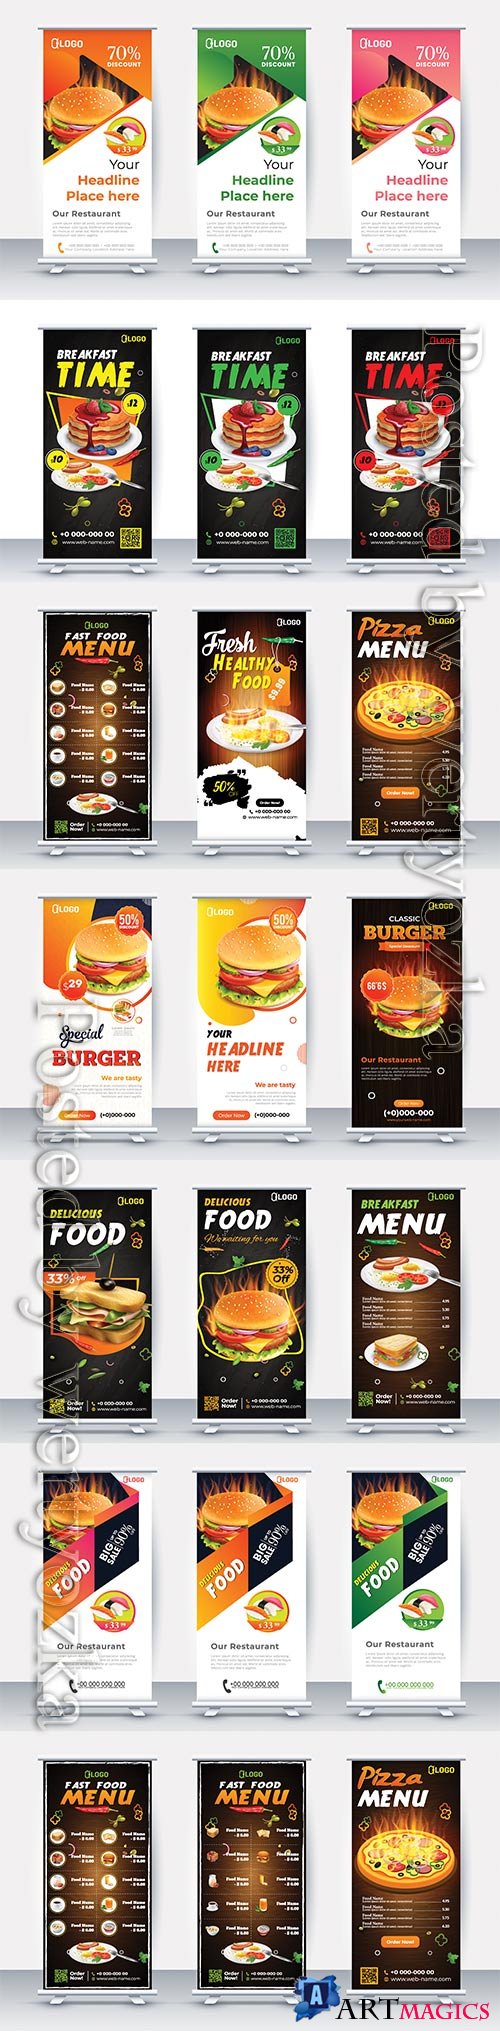 Fast food roll up banner restaurant menu template